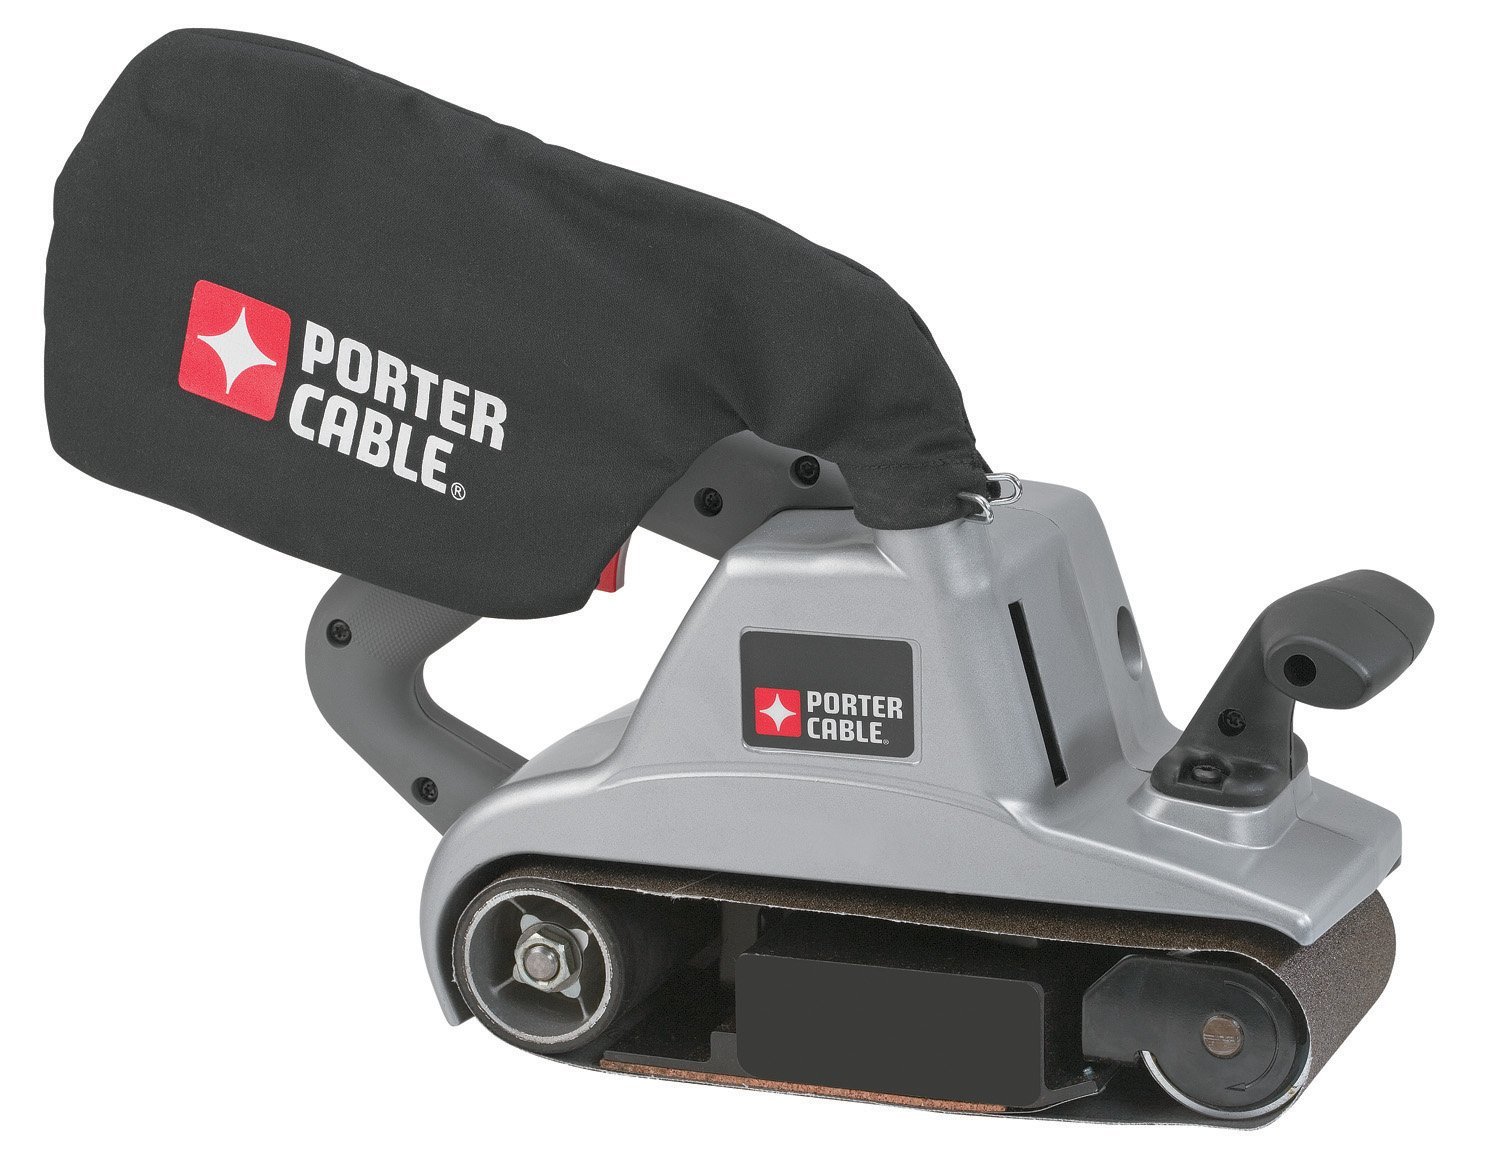 Tool Review: 4×24 Heavy Duty Belt Sander - Timber Frame HQ